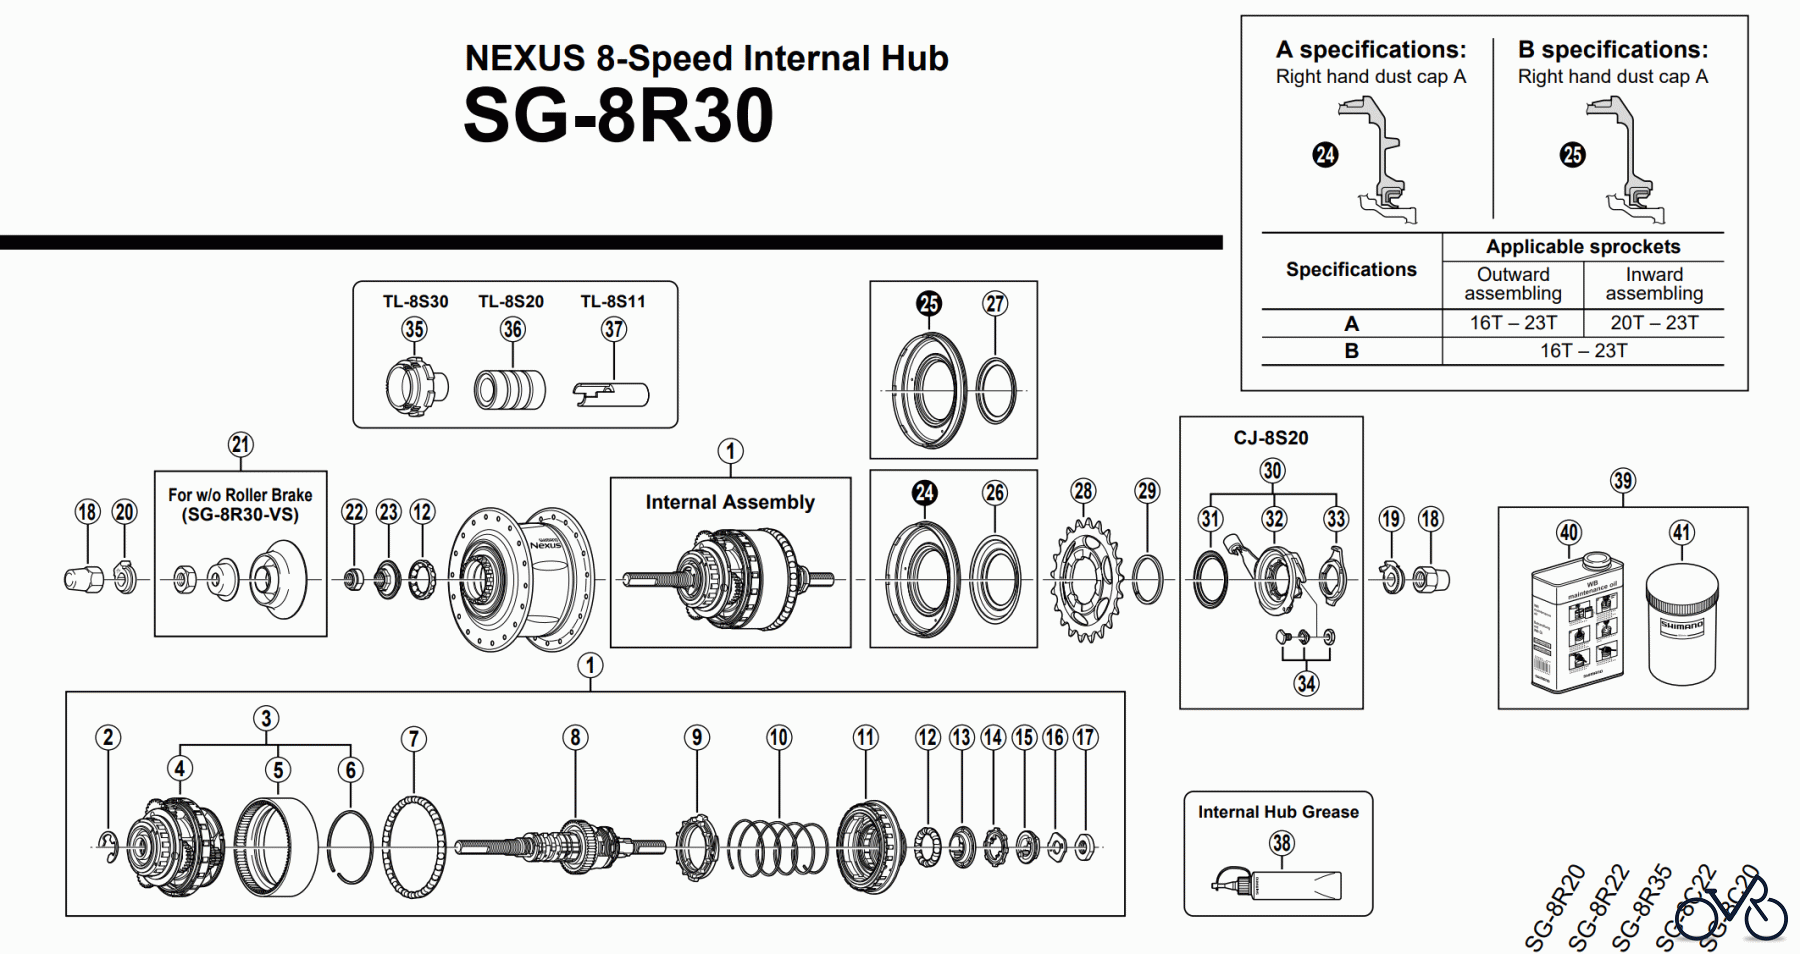  Shimano SG Getriebenabe /Nabenschaltung SG-8R30 NEXUS 8-Speed Internal Hub